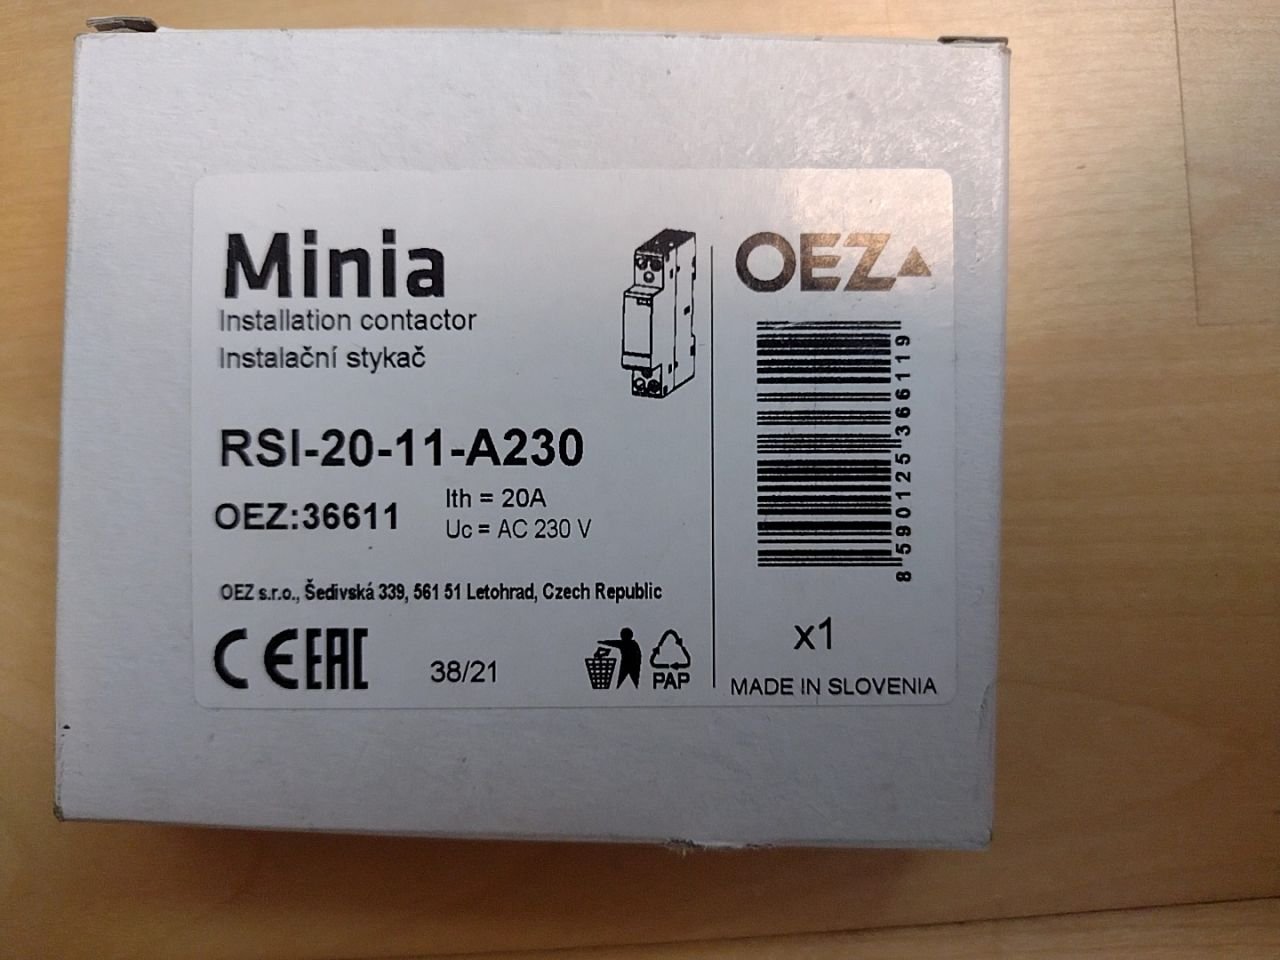 Instalační stykač Minia OEZ:36611